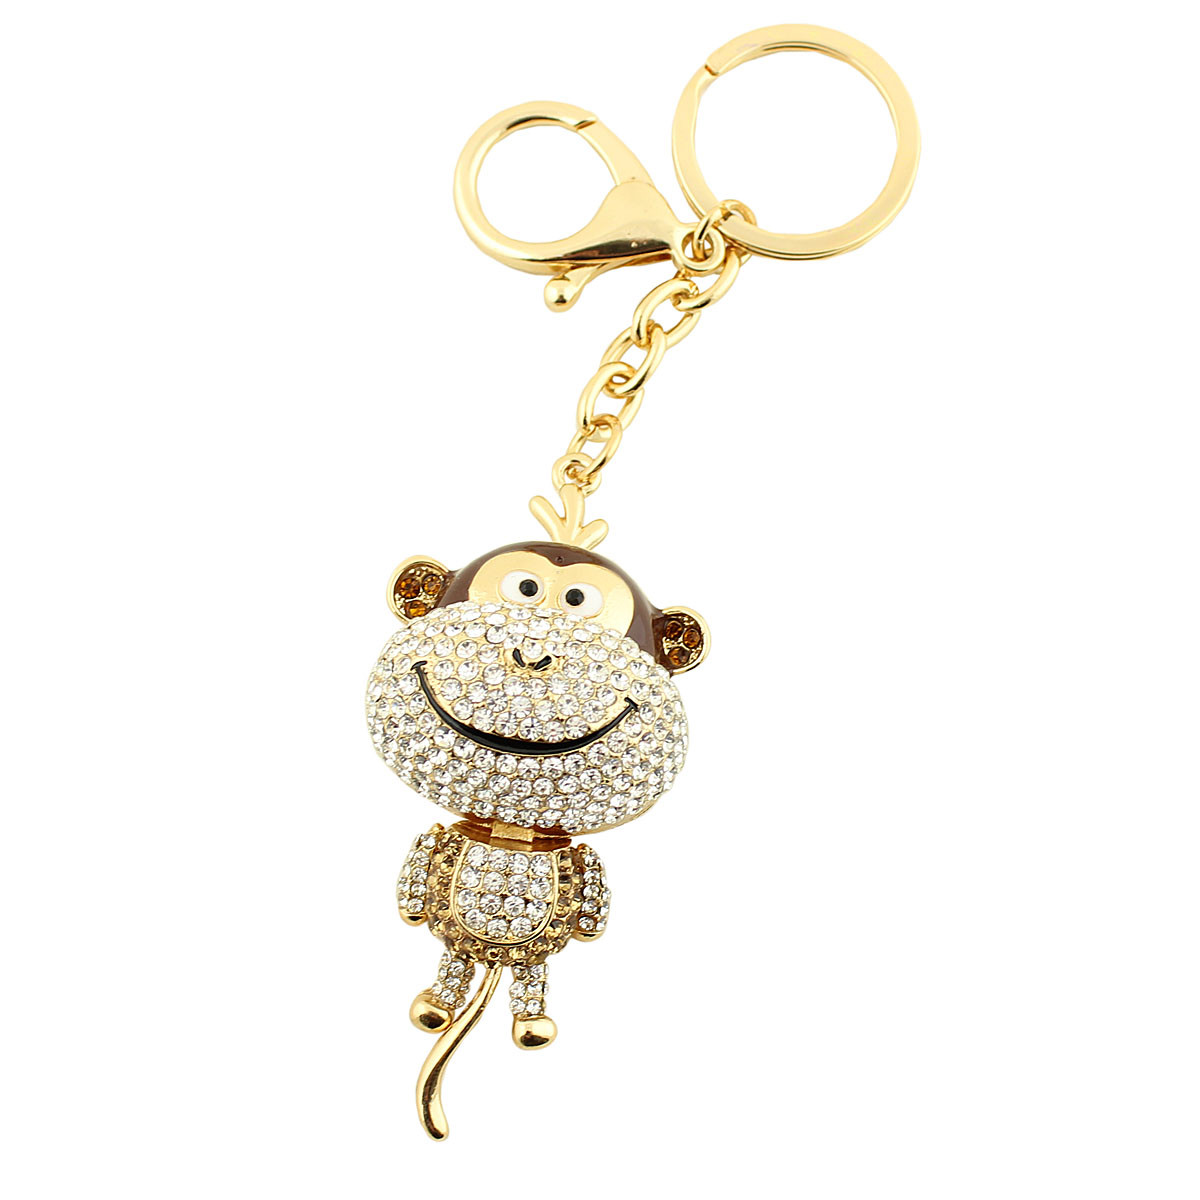 Rhinestone Bling Funkey Monkey Key Chain Purse Charm with gold tones 